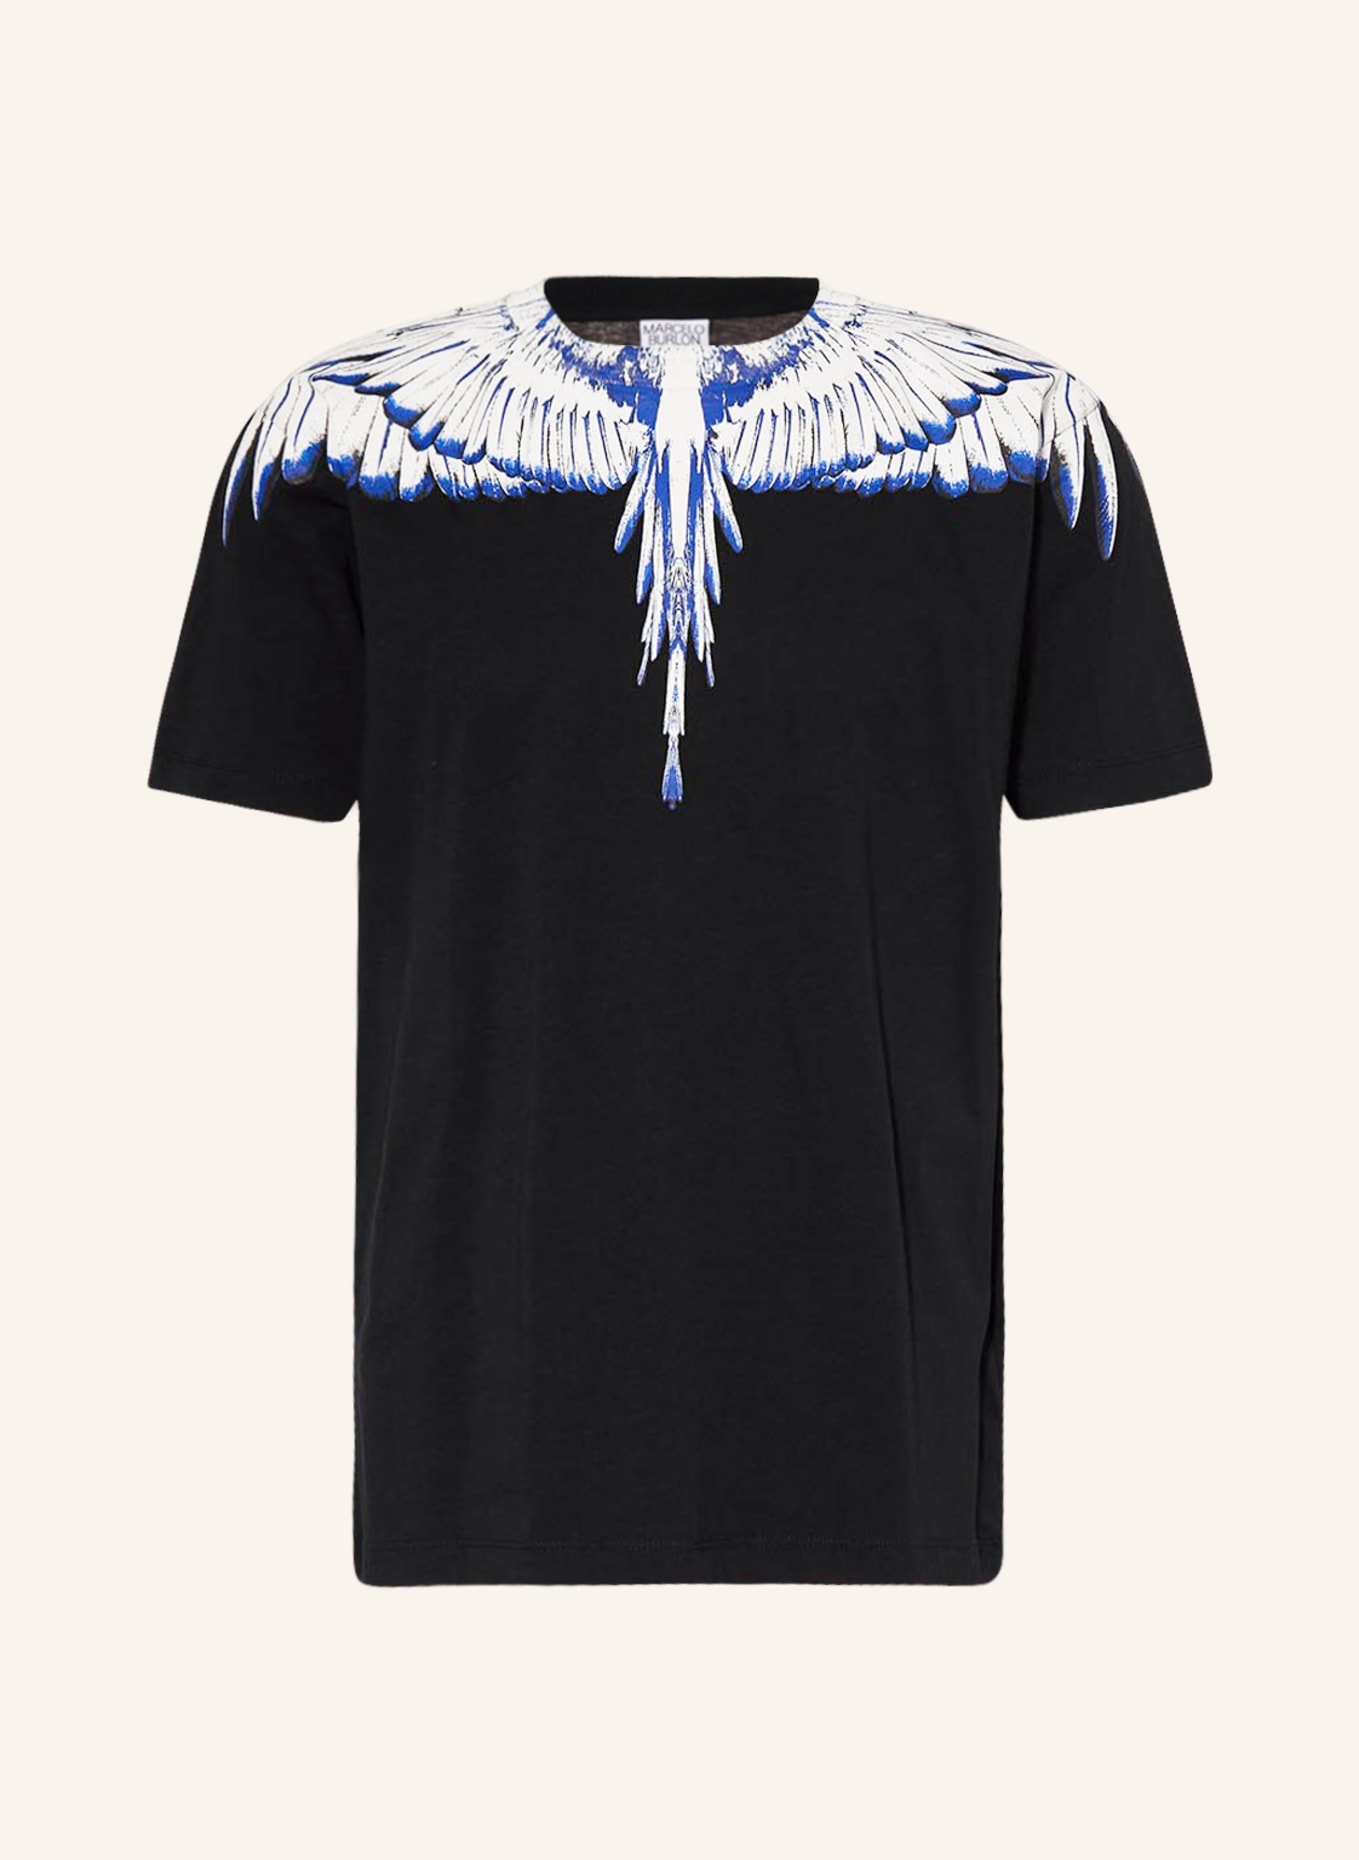 MARCELO BURLON T-Shirt ICON WINGS, Farbe: SCHWARZ/ WEISS/ BLAU (Bild 1)